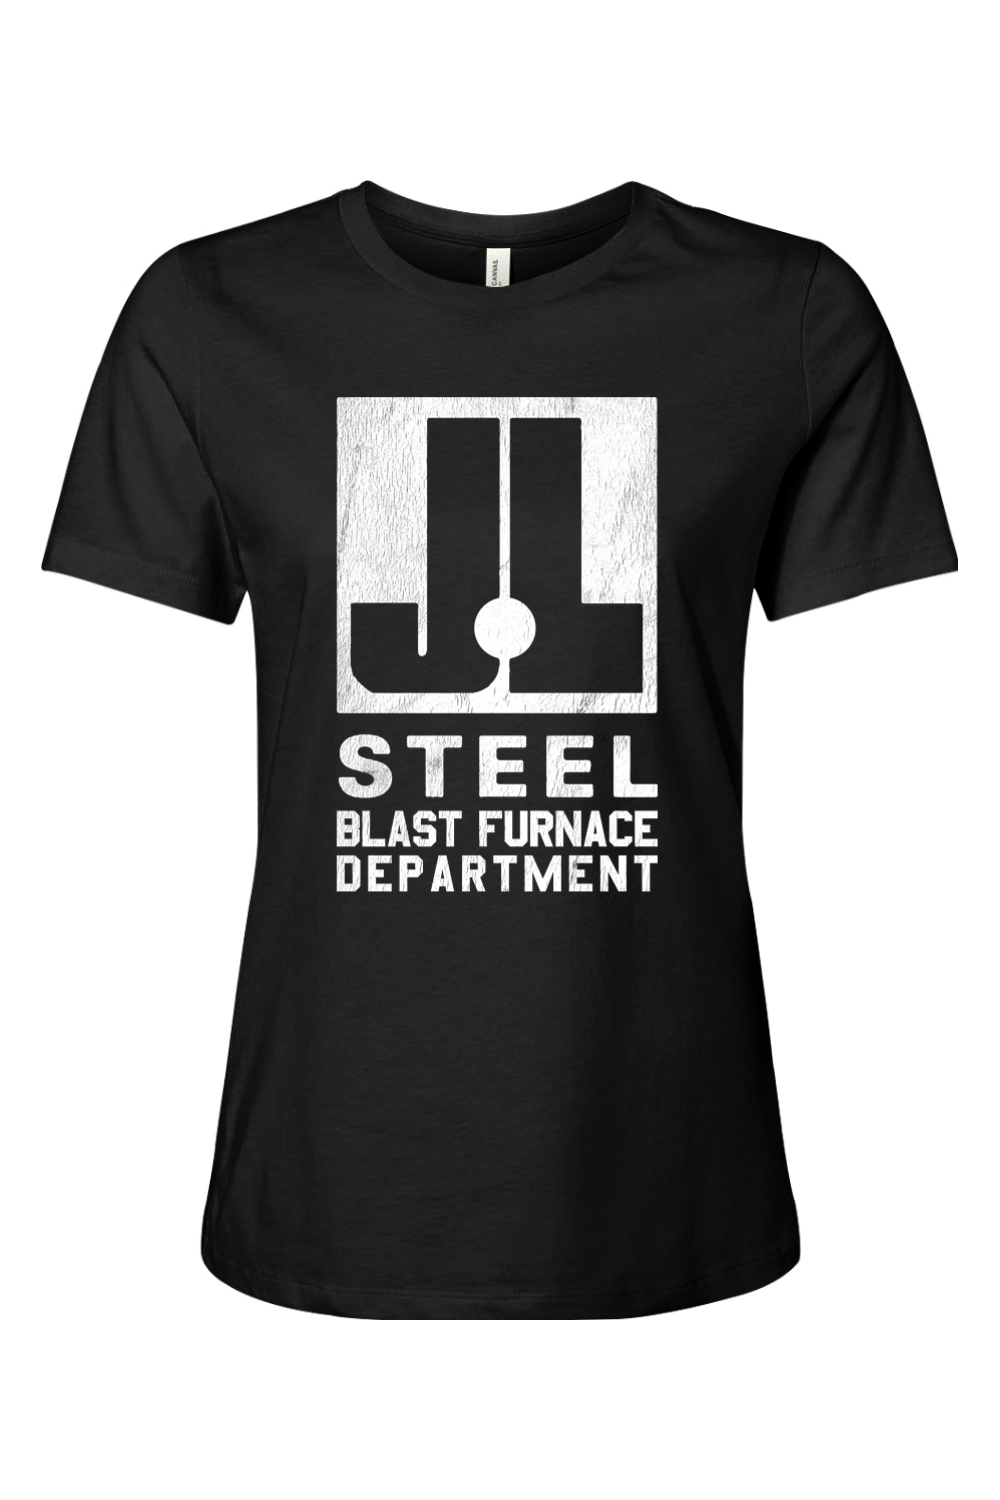 J&L Steel Blast Furnace Dept. - Ladies Tee - Yinzylvania